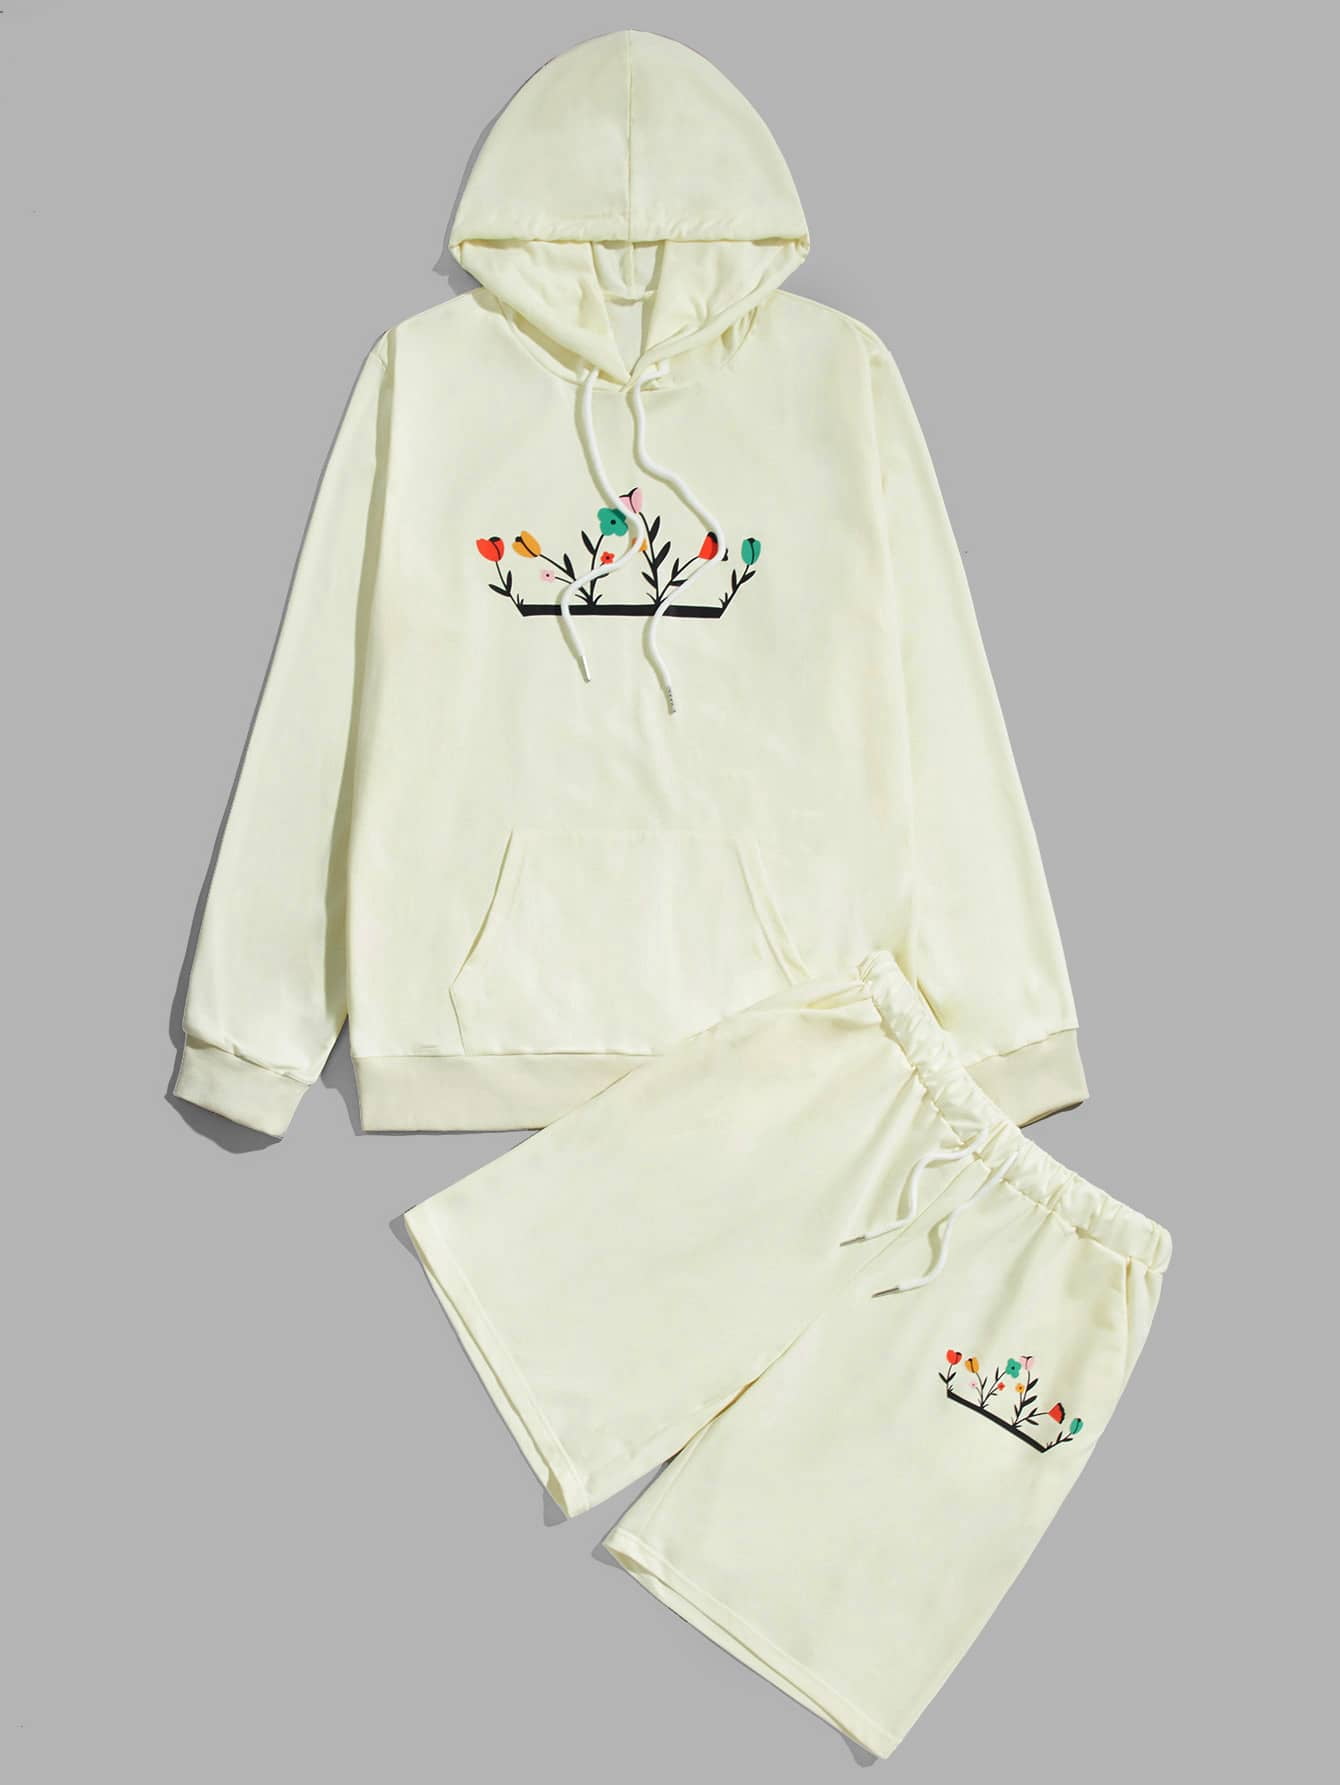 YUSKY Mens Floral Printed Drawstring Hooded Pocket Sweatshirts 